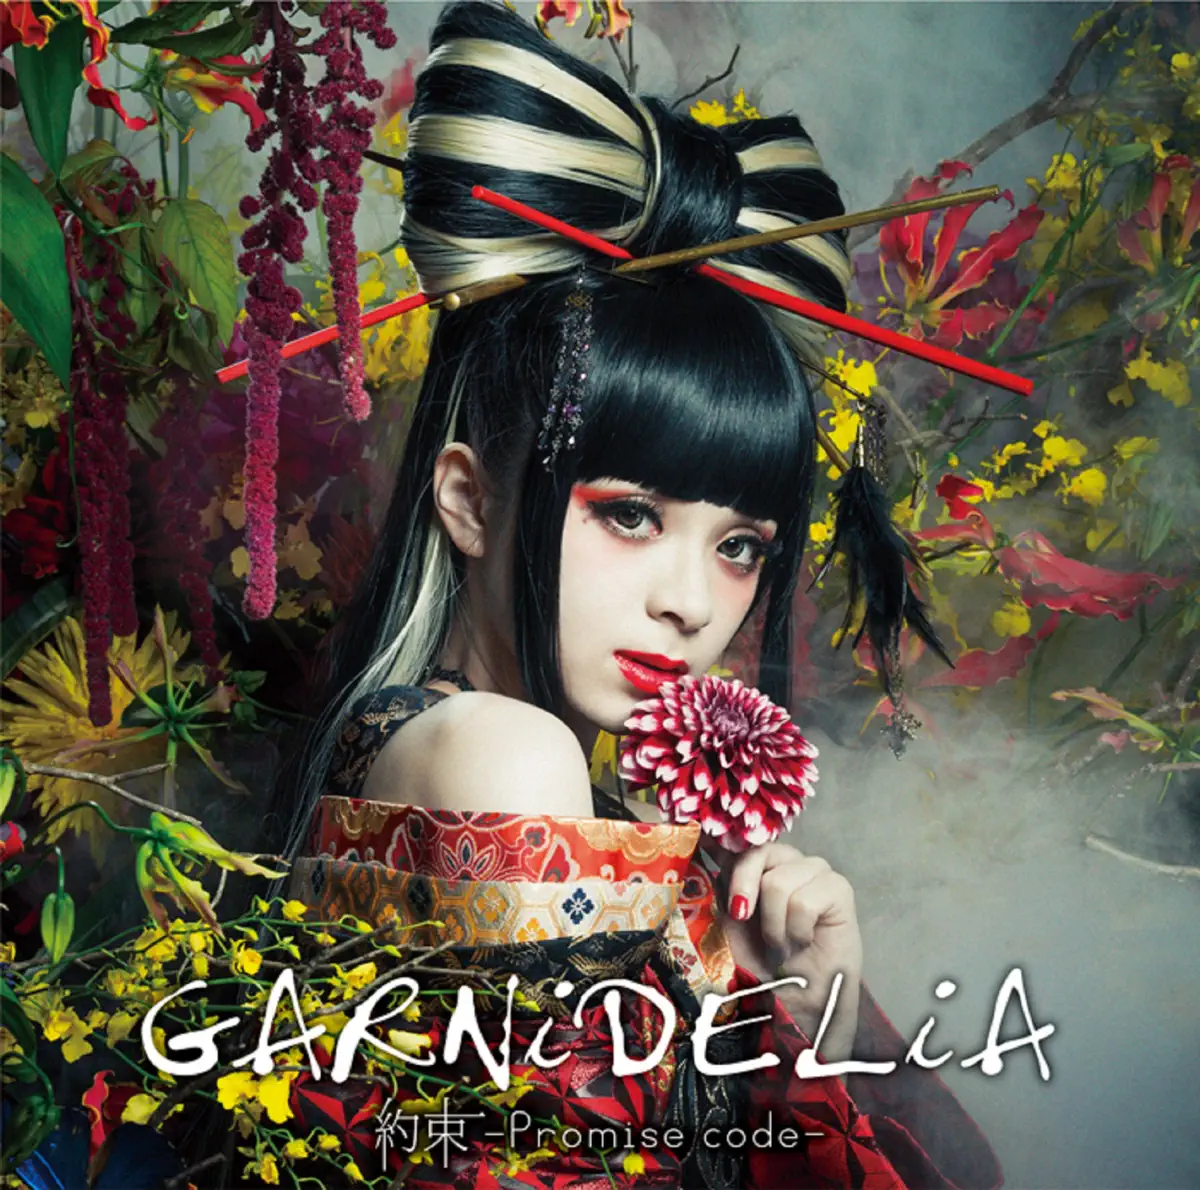 GARNiDELiA - 約束 -Promise code- - EP (2016) [iTunes Plus AAC M4A]-新房子